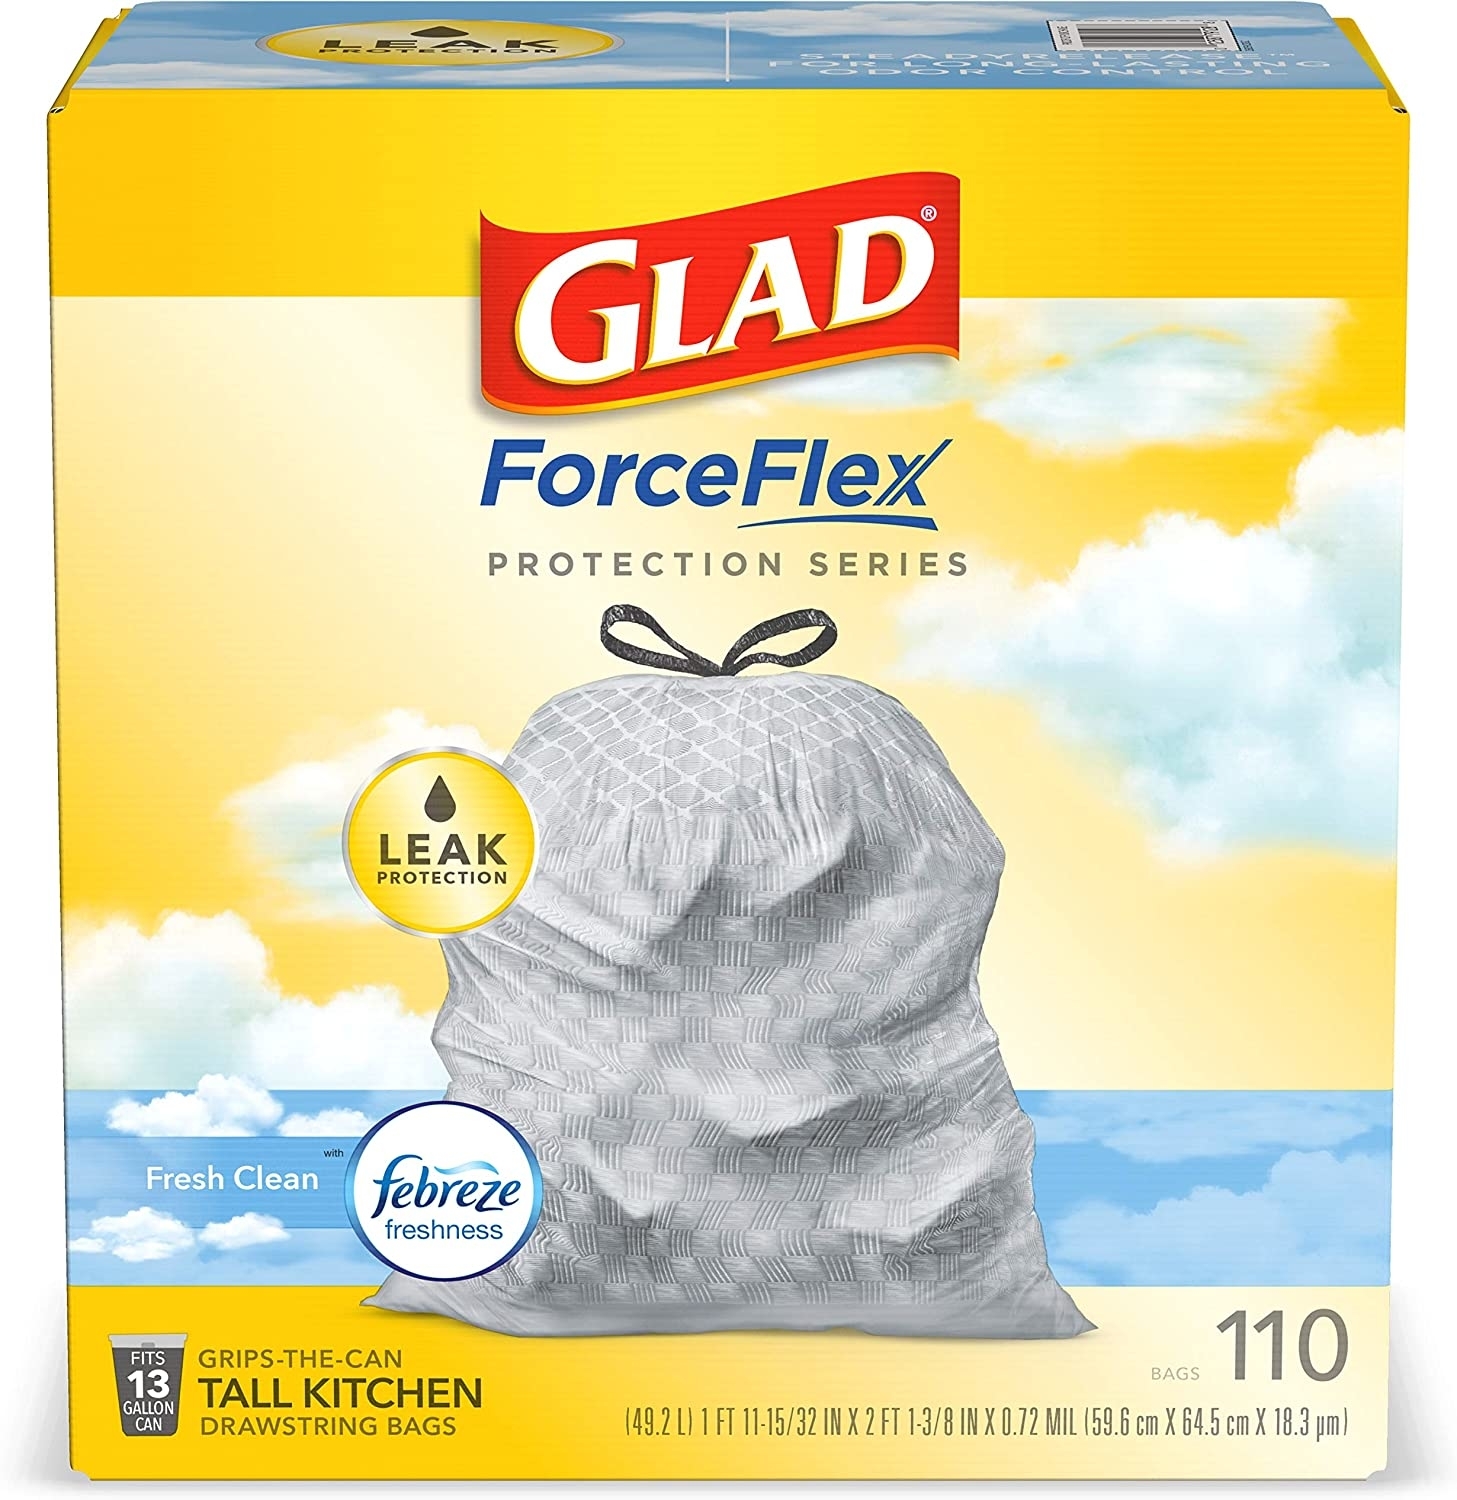 Glad ForceFlex Plus TV Spot, 'The Happiest Trash Bag' 